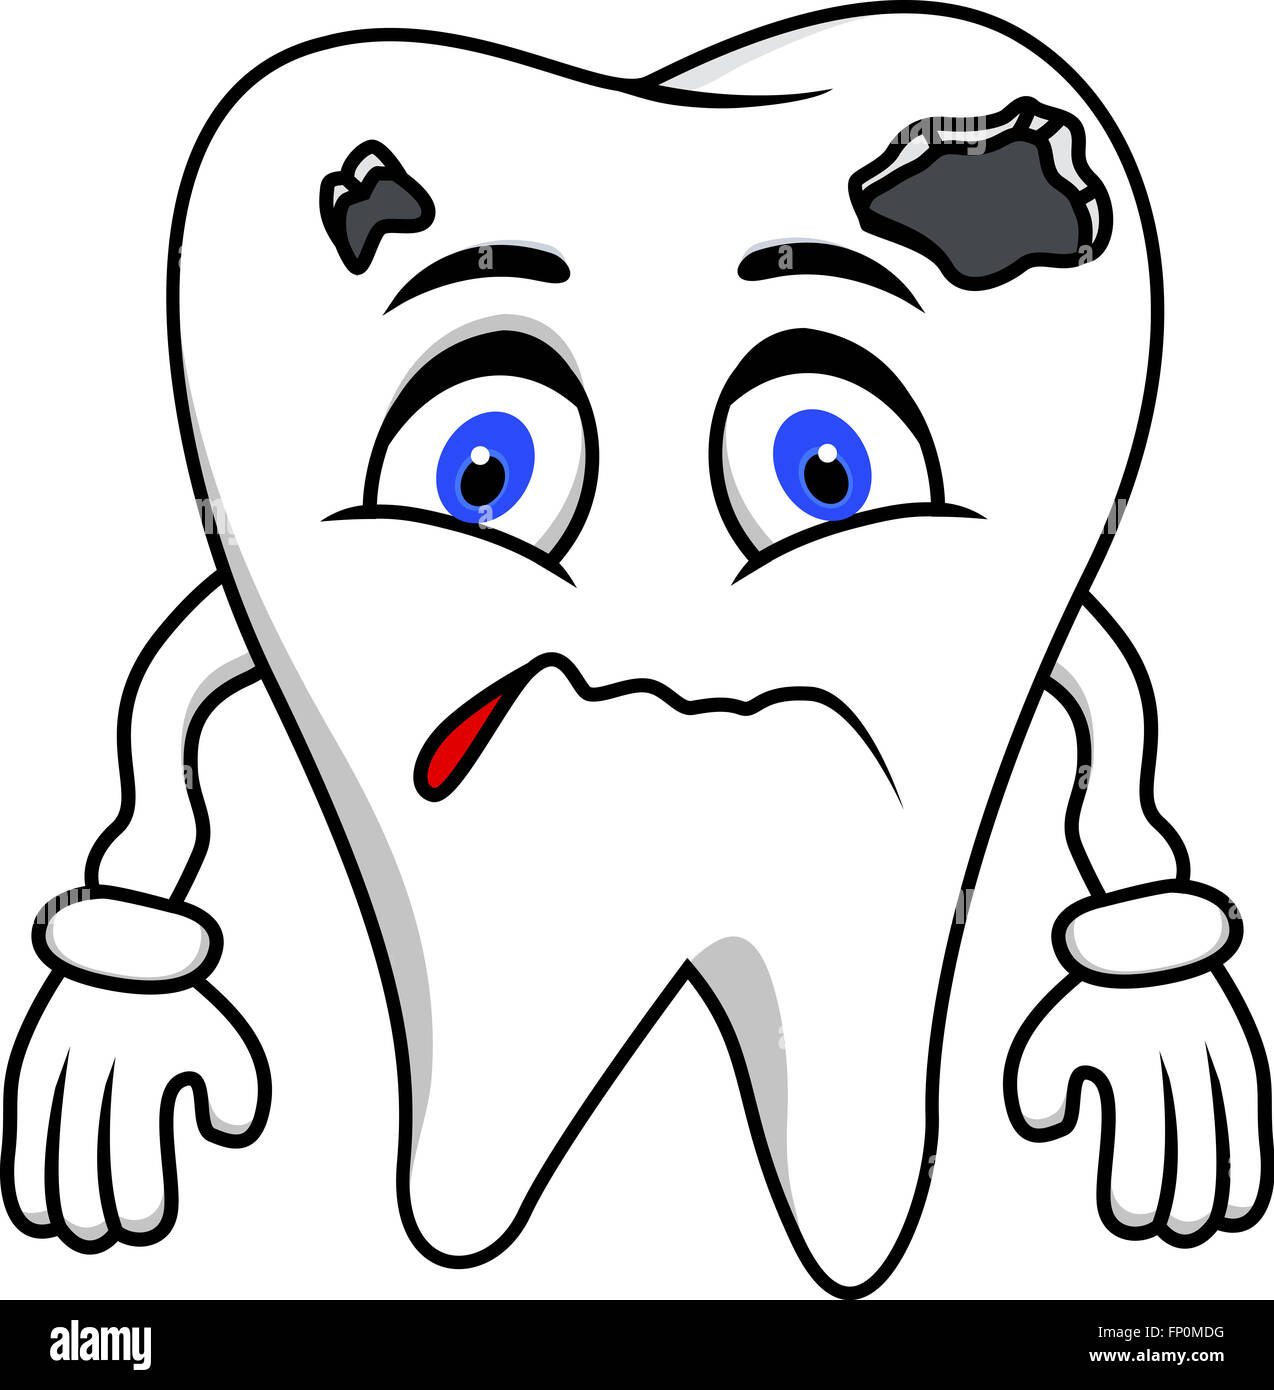 Sad tooth illustration. Bad mood, human face cartoon Stock Photo